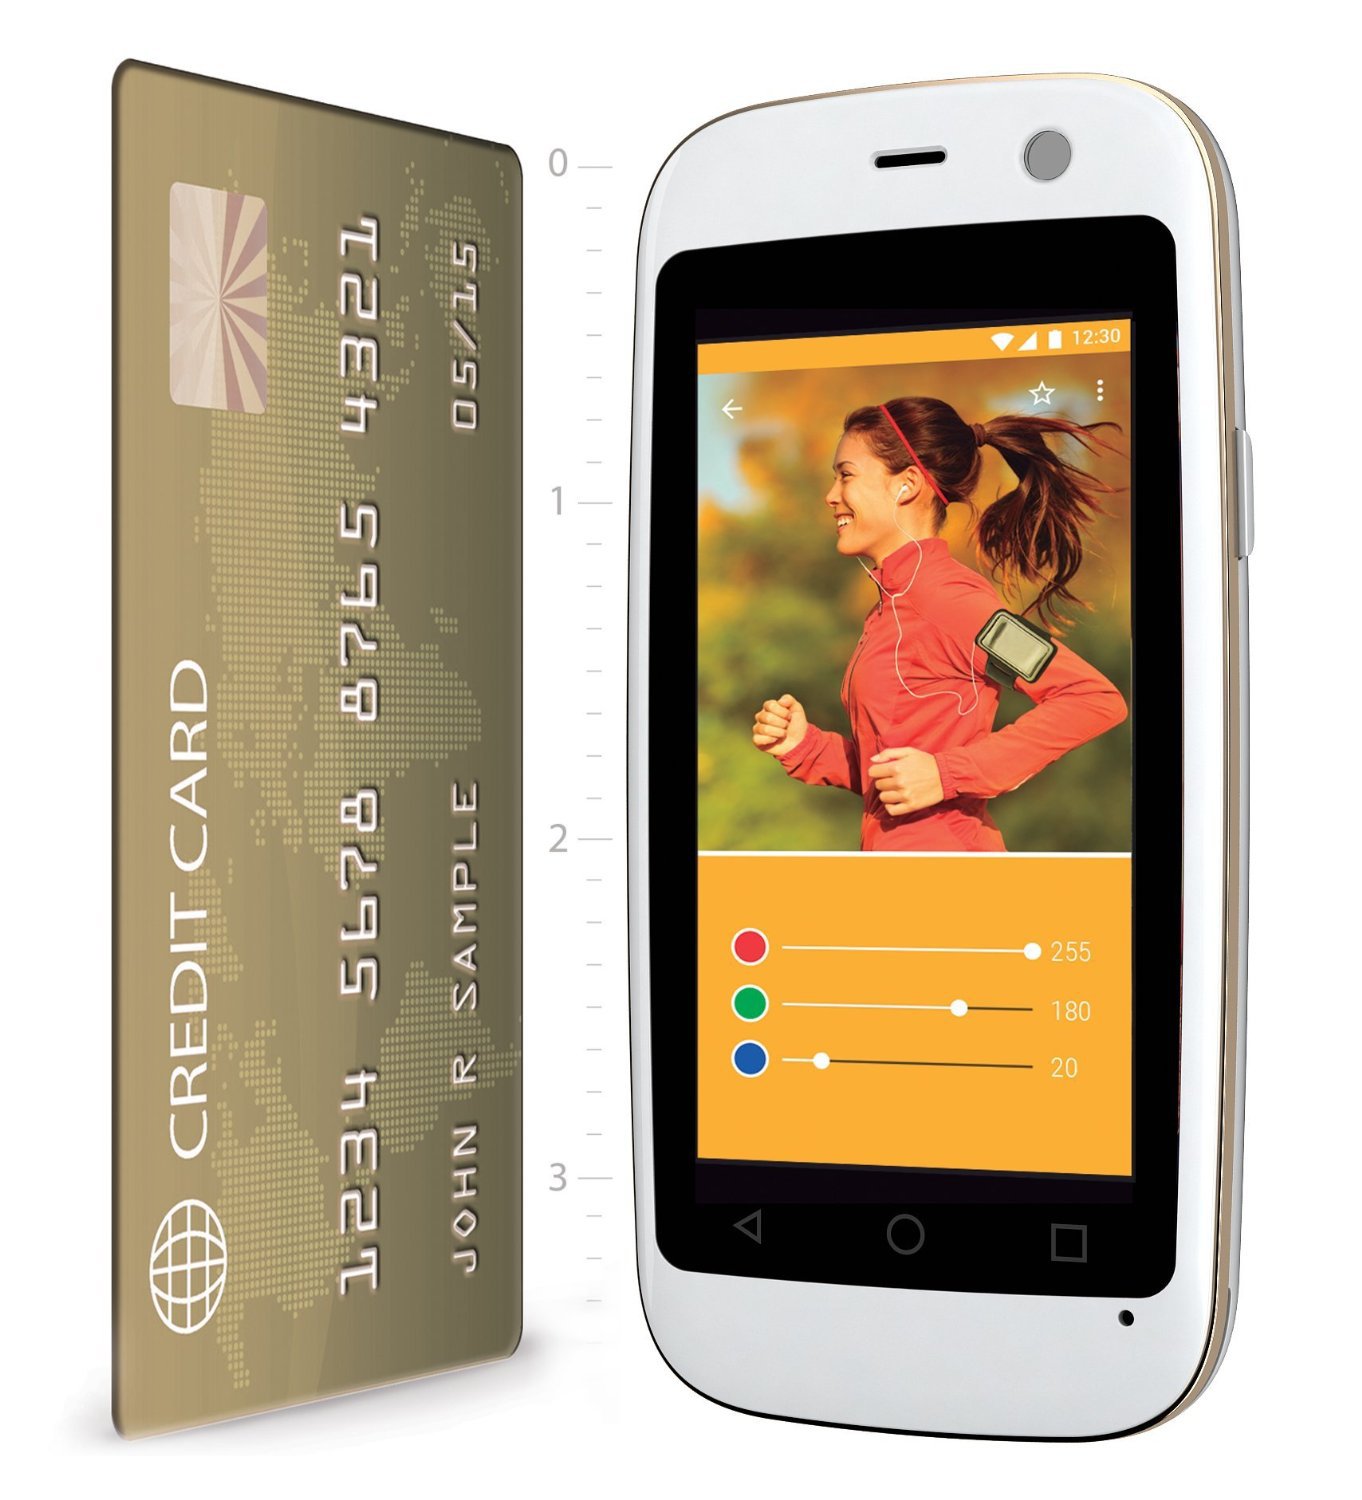 Микро мобайл. Posh mobile Micro x s240. Смартфон с маленьким экраном. Маленький телефон на андроиде. Смартфоны маленькие по размеру.